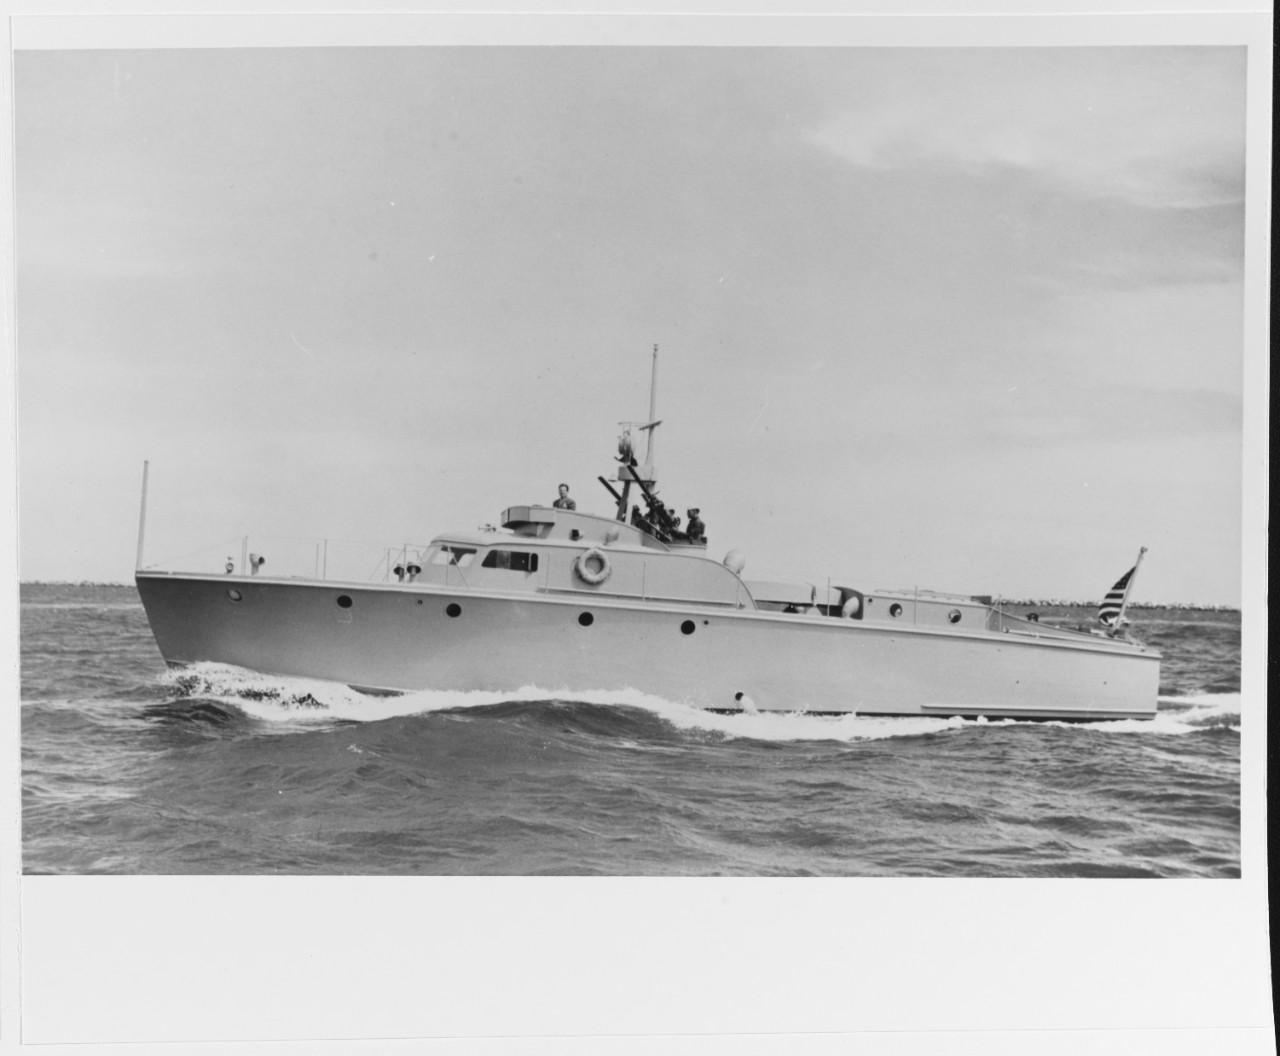 63-foot air-sea rescue boat (serial # c-20982)